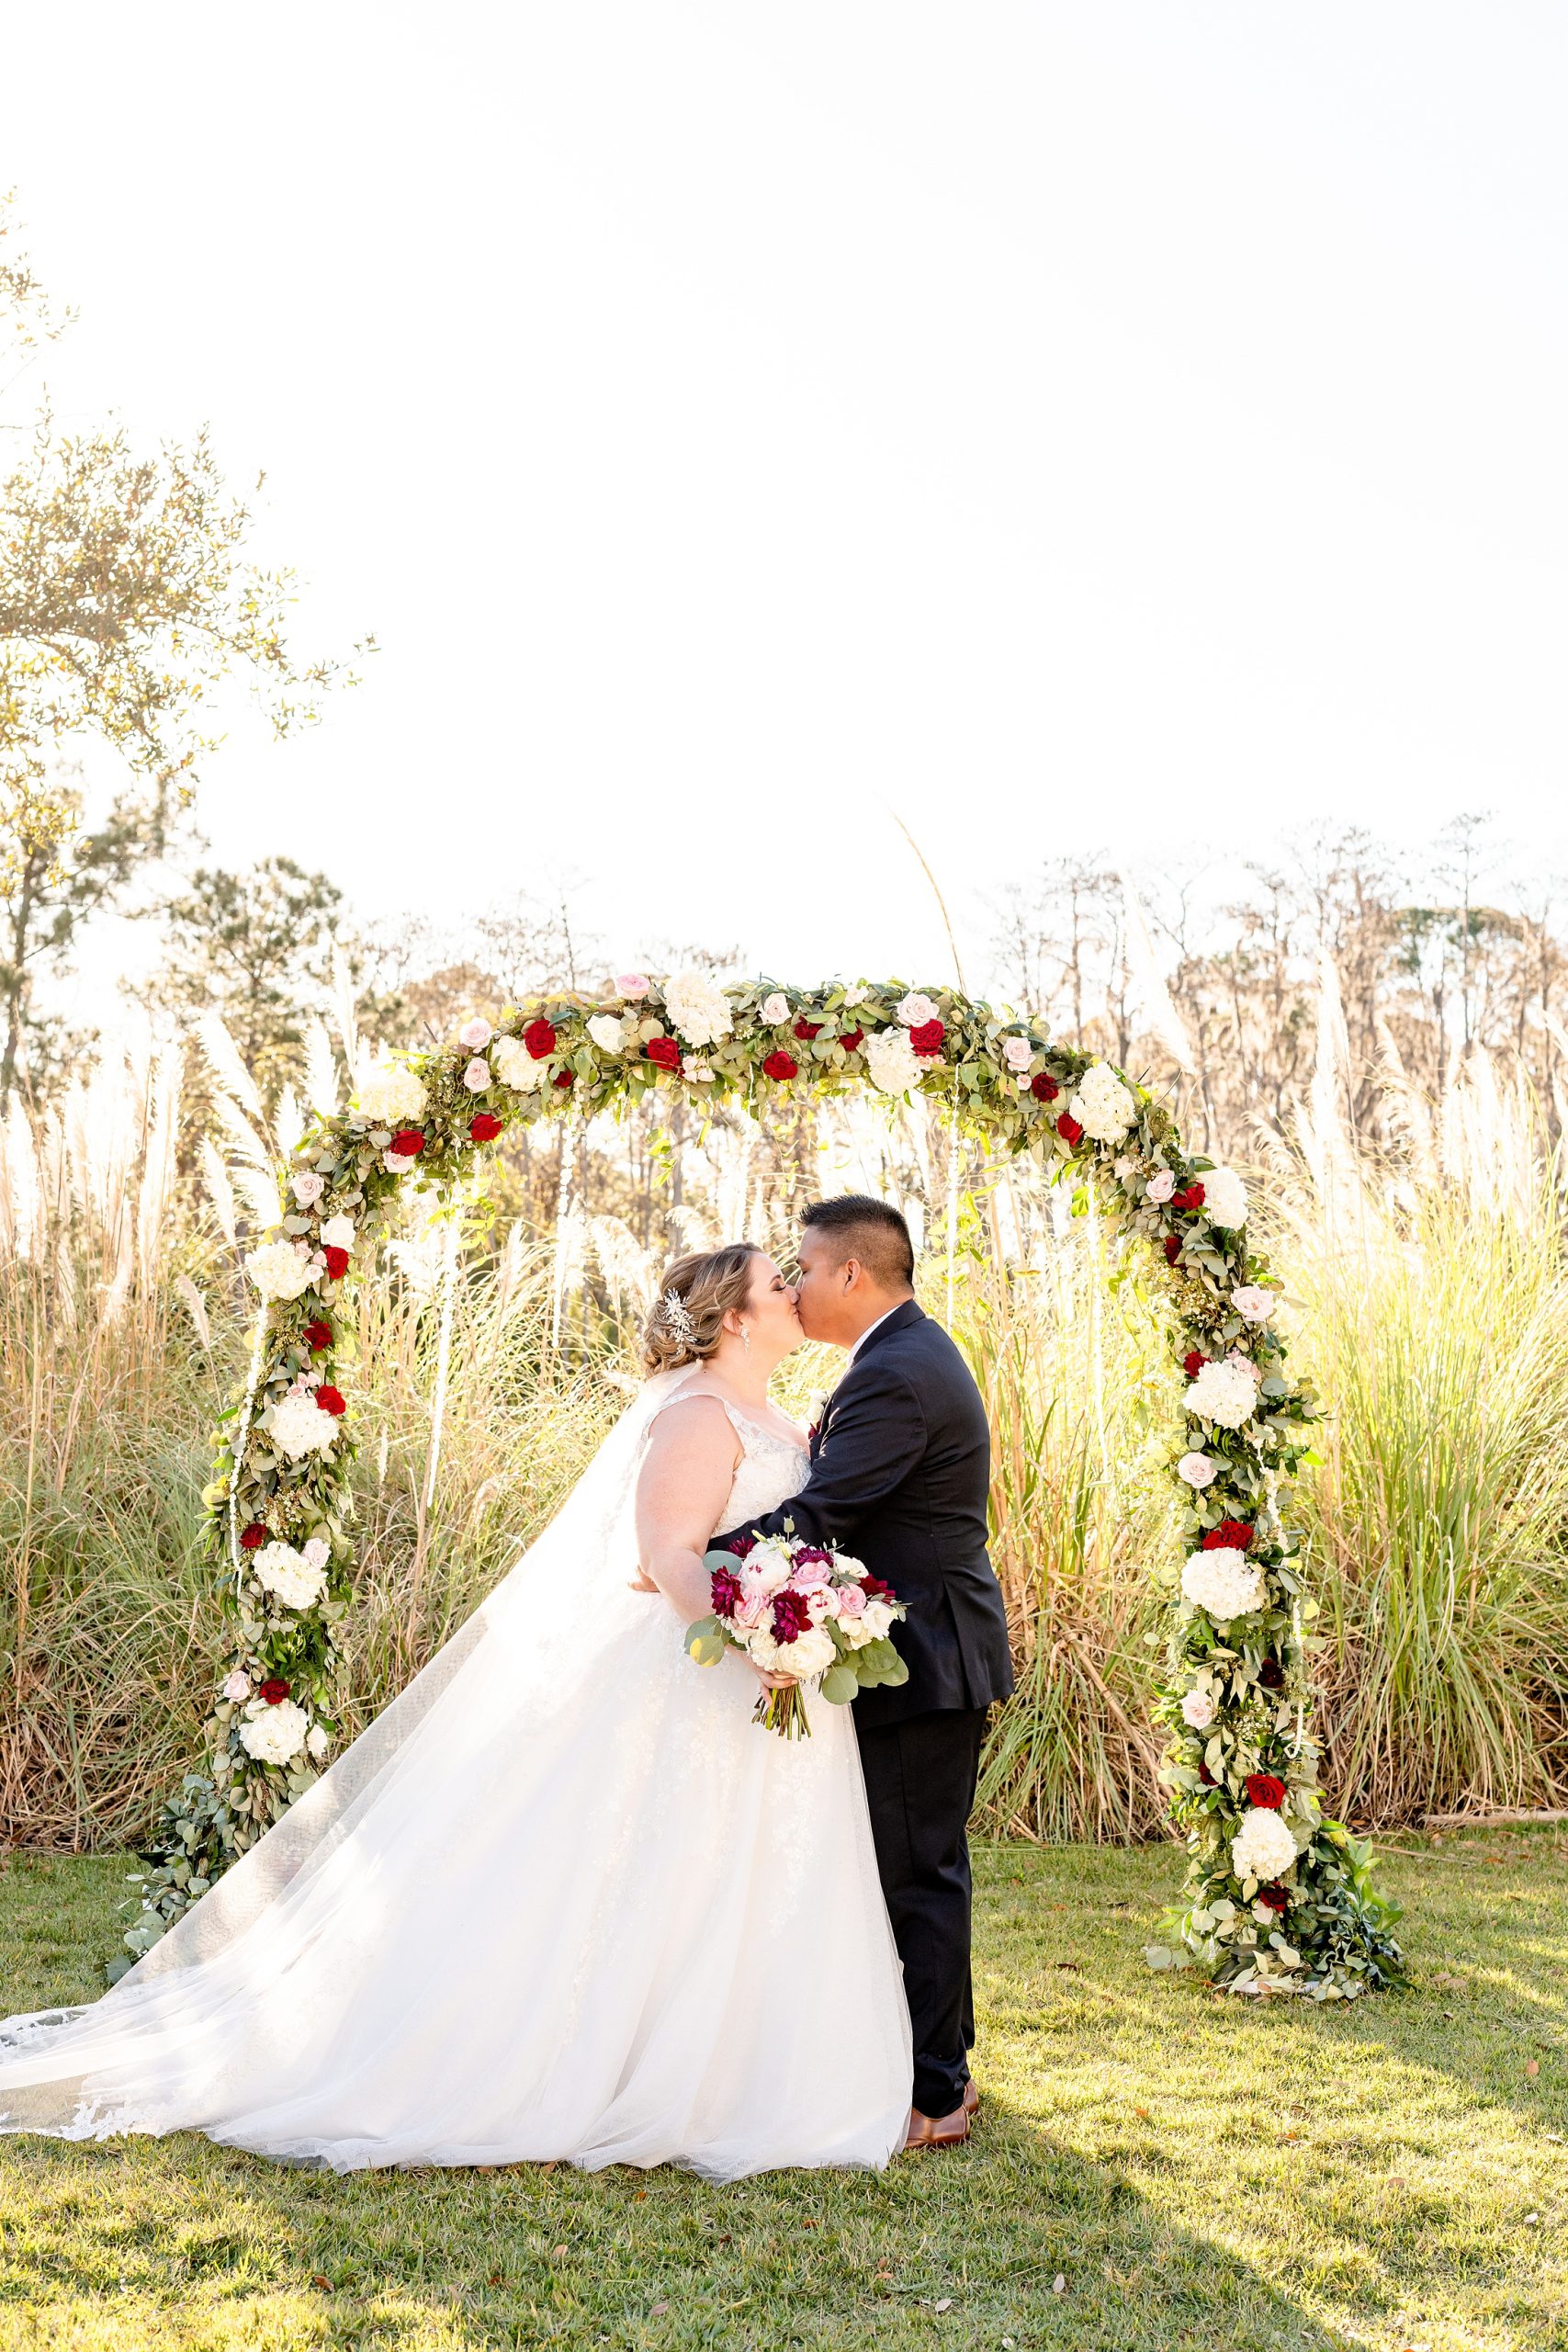 Wedding Floral Arch | Four Seasons Wedding | Chynna Pacheco Photography